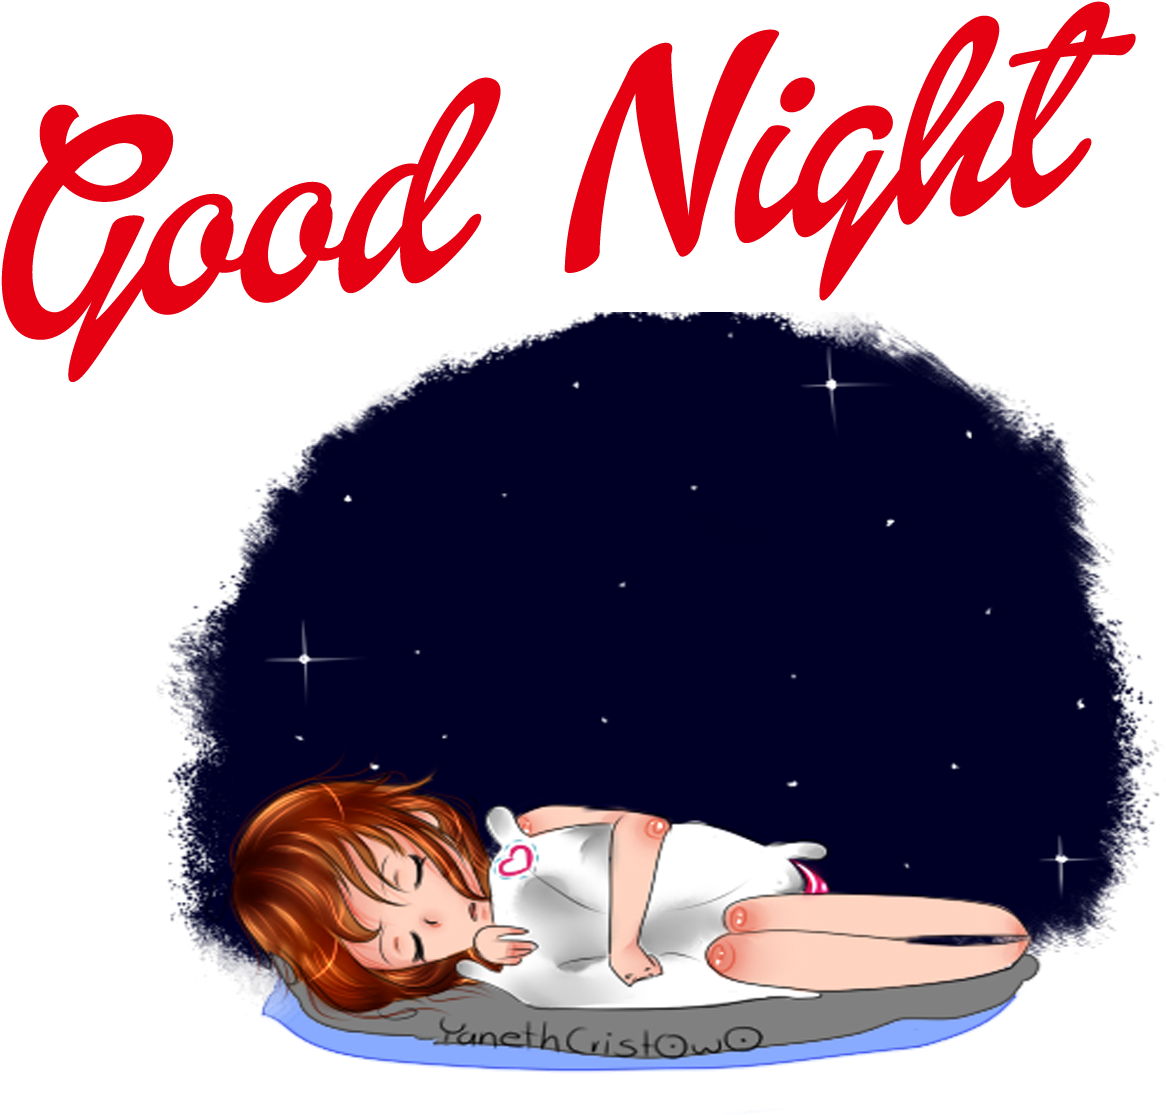 Good Night Image Png (1298x1200), Png Download